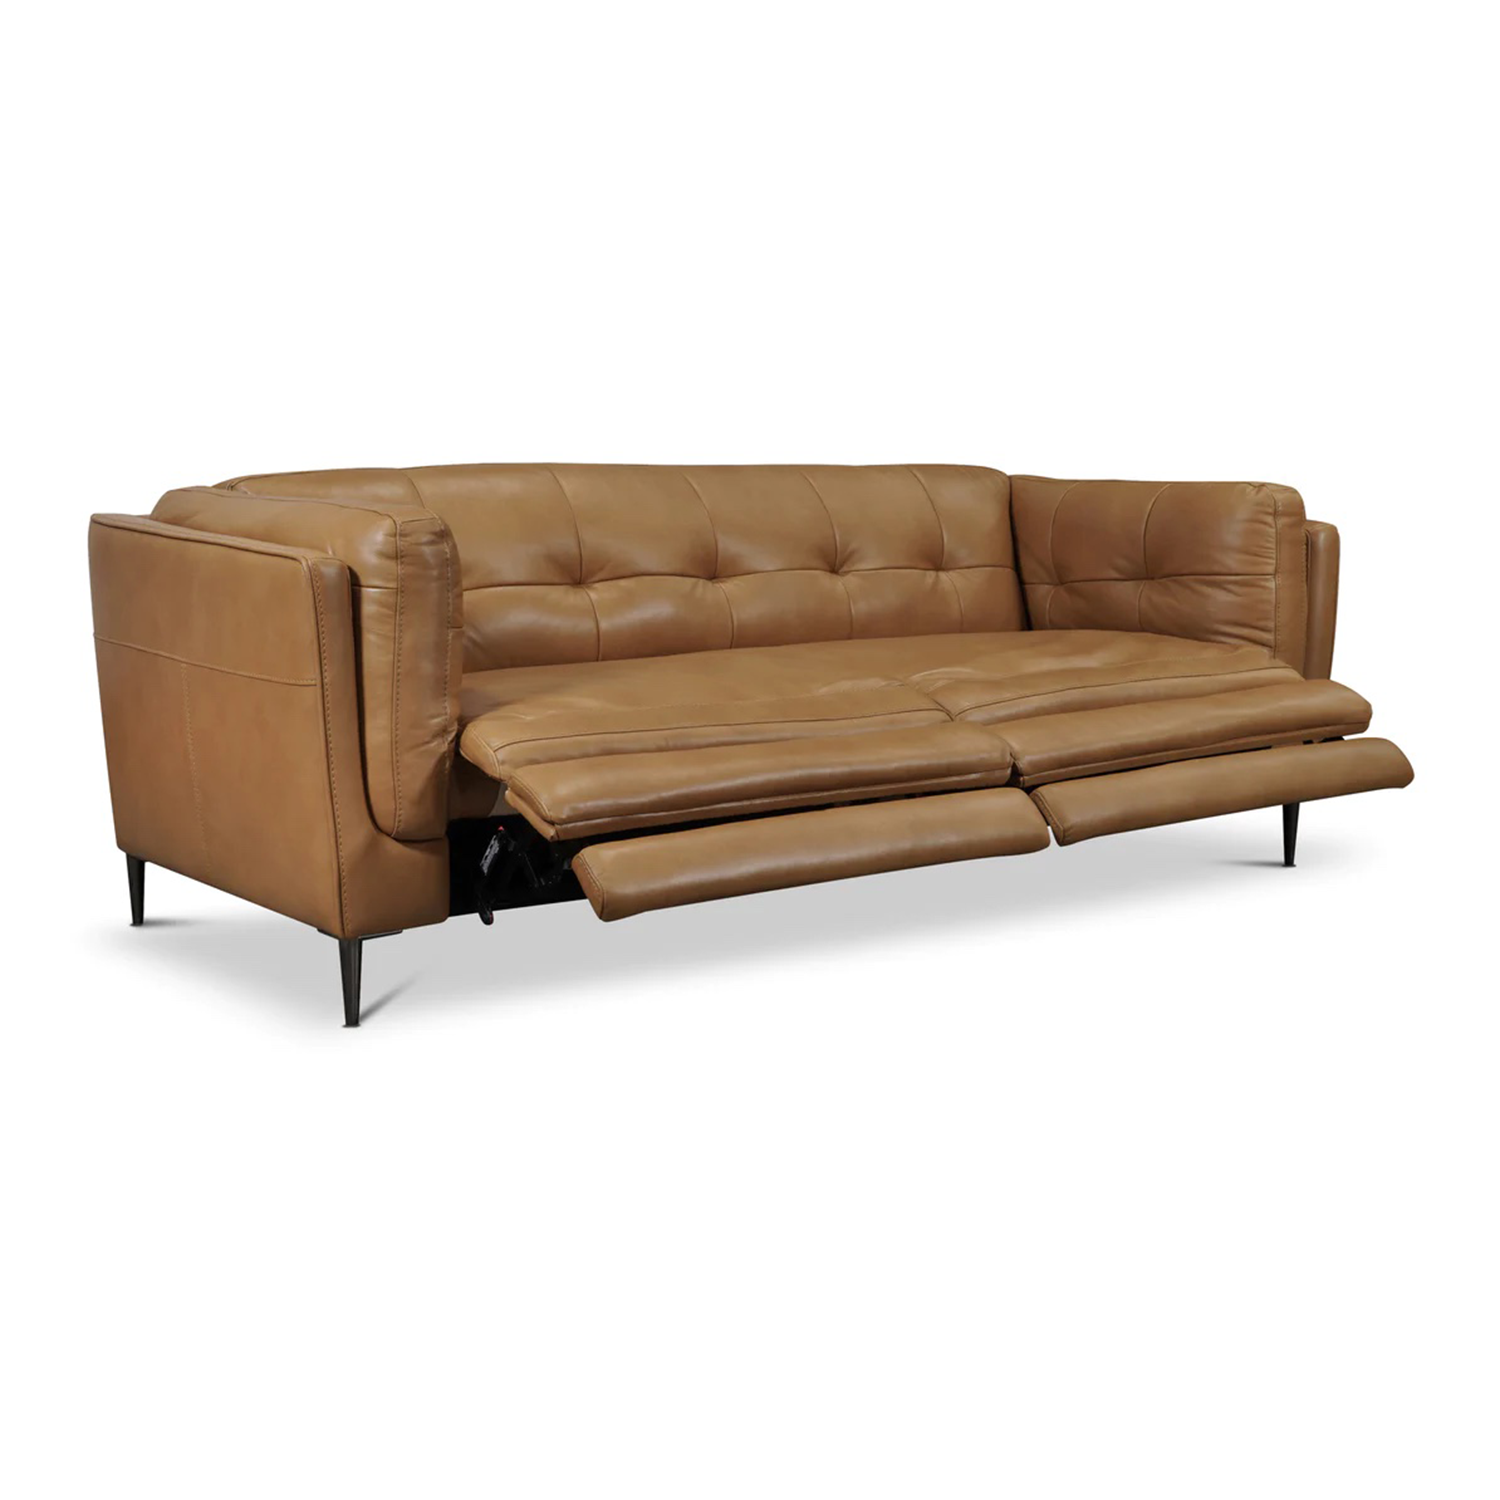 leather reclining sofa